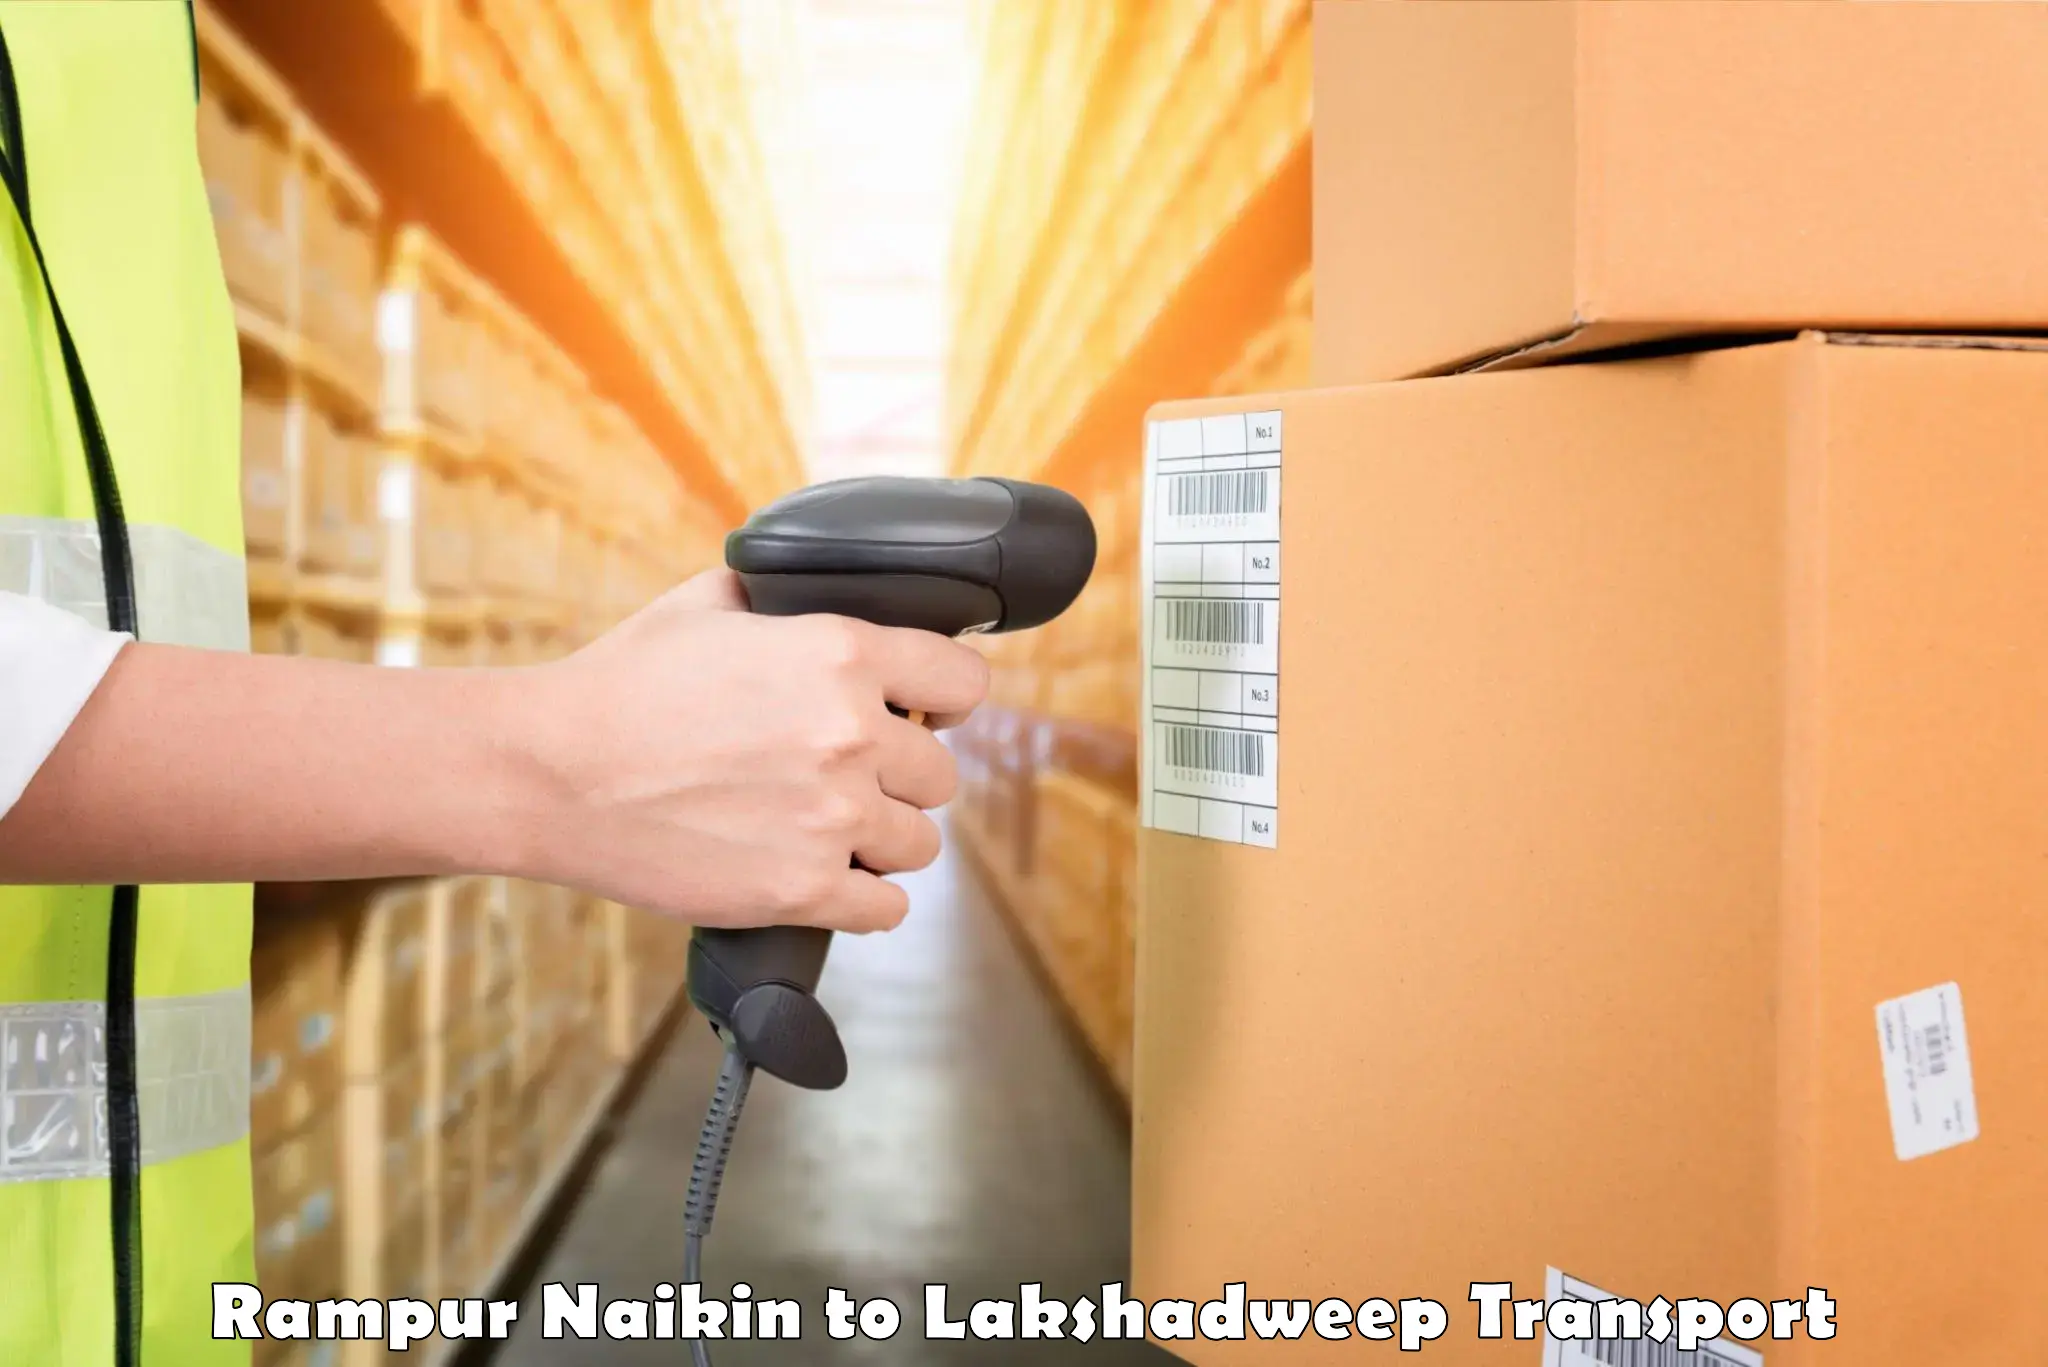 Delivery service Rampur Naikin to Lakshadweep